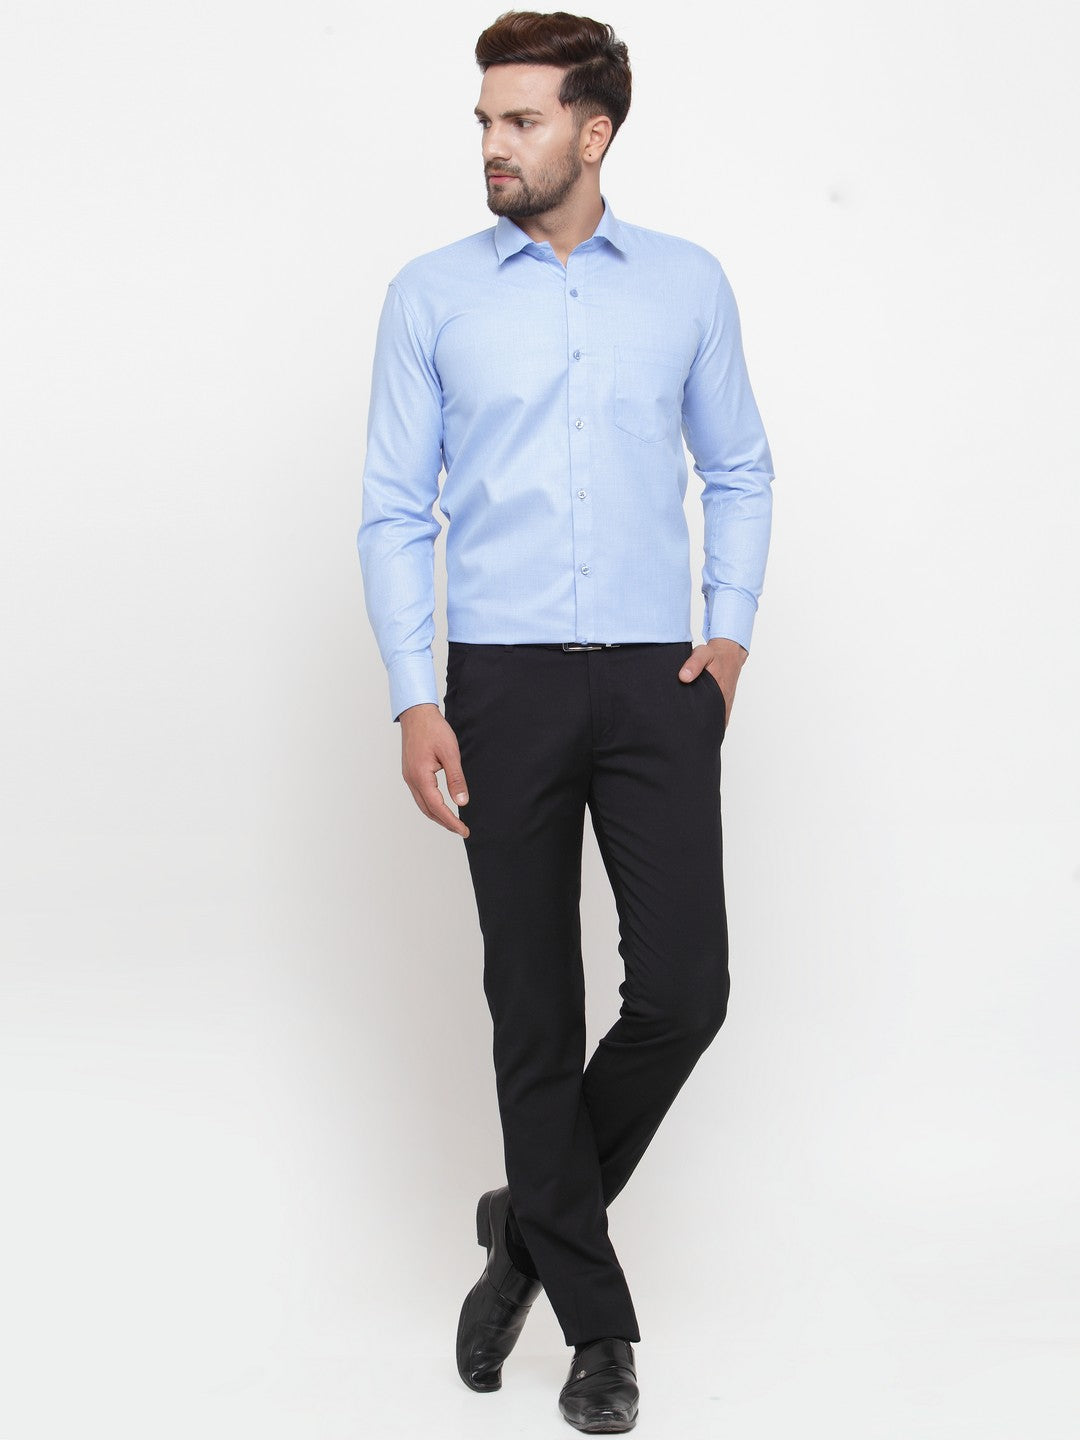 Men's Blue Cotton Geometric Formal Shirts ( SF 434Blue ) - Jainish